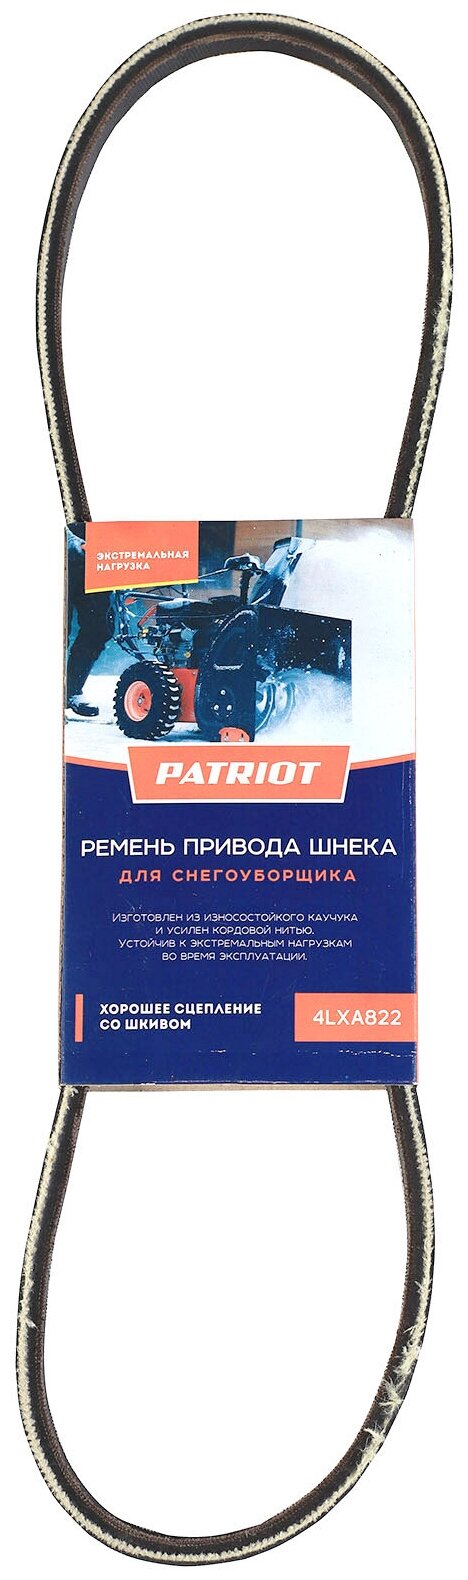 Ремень привода шнека для снегоуборщика Patriot 4LXA822